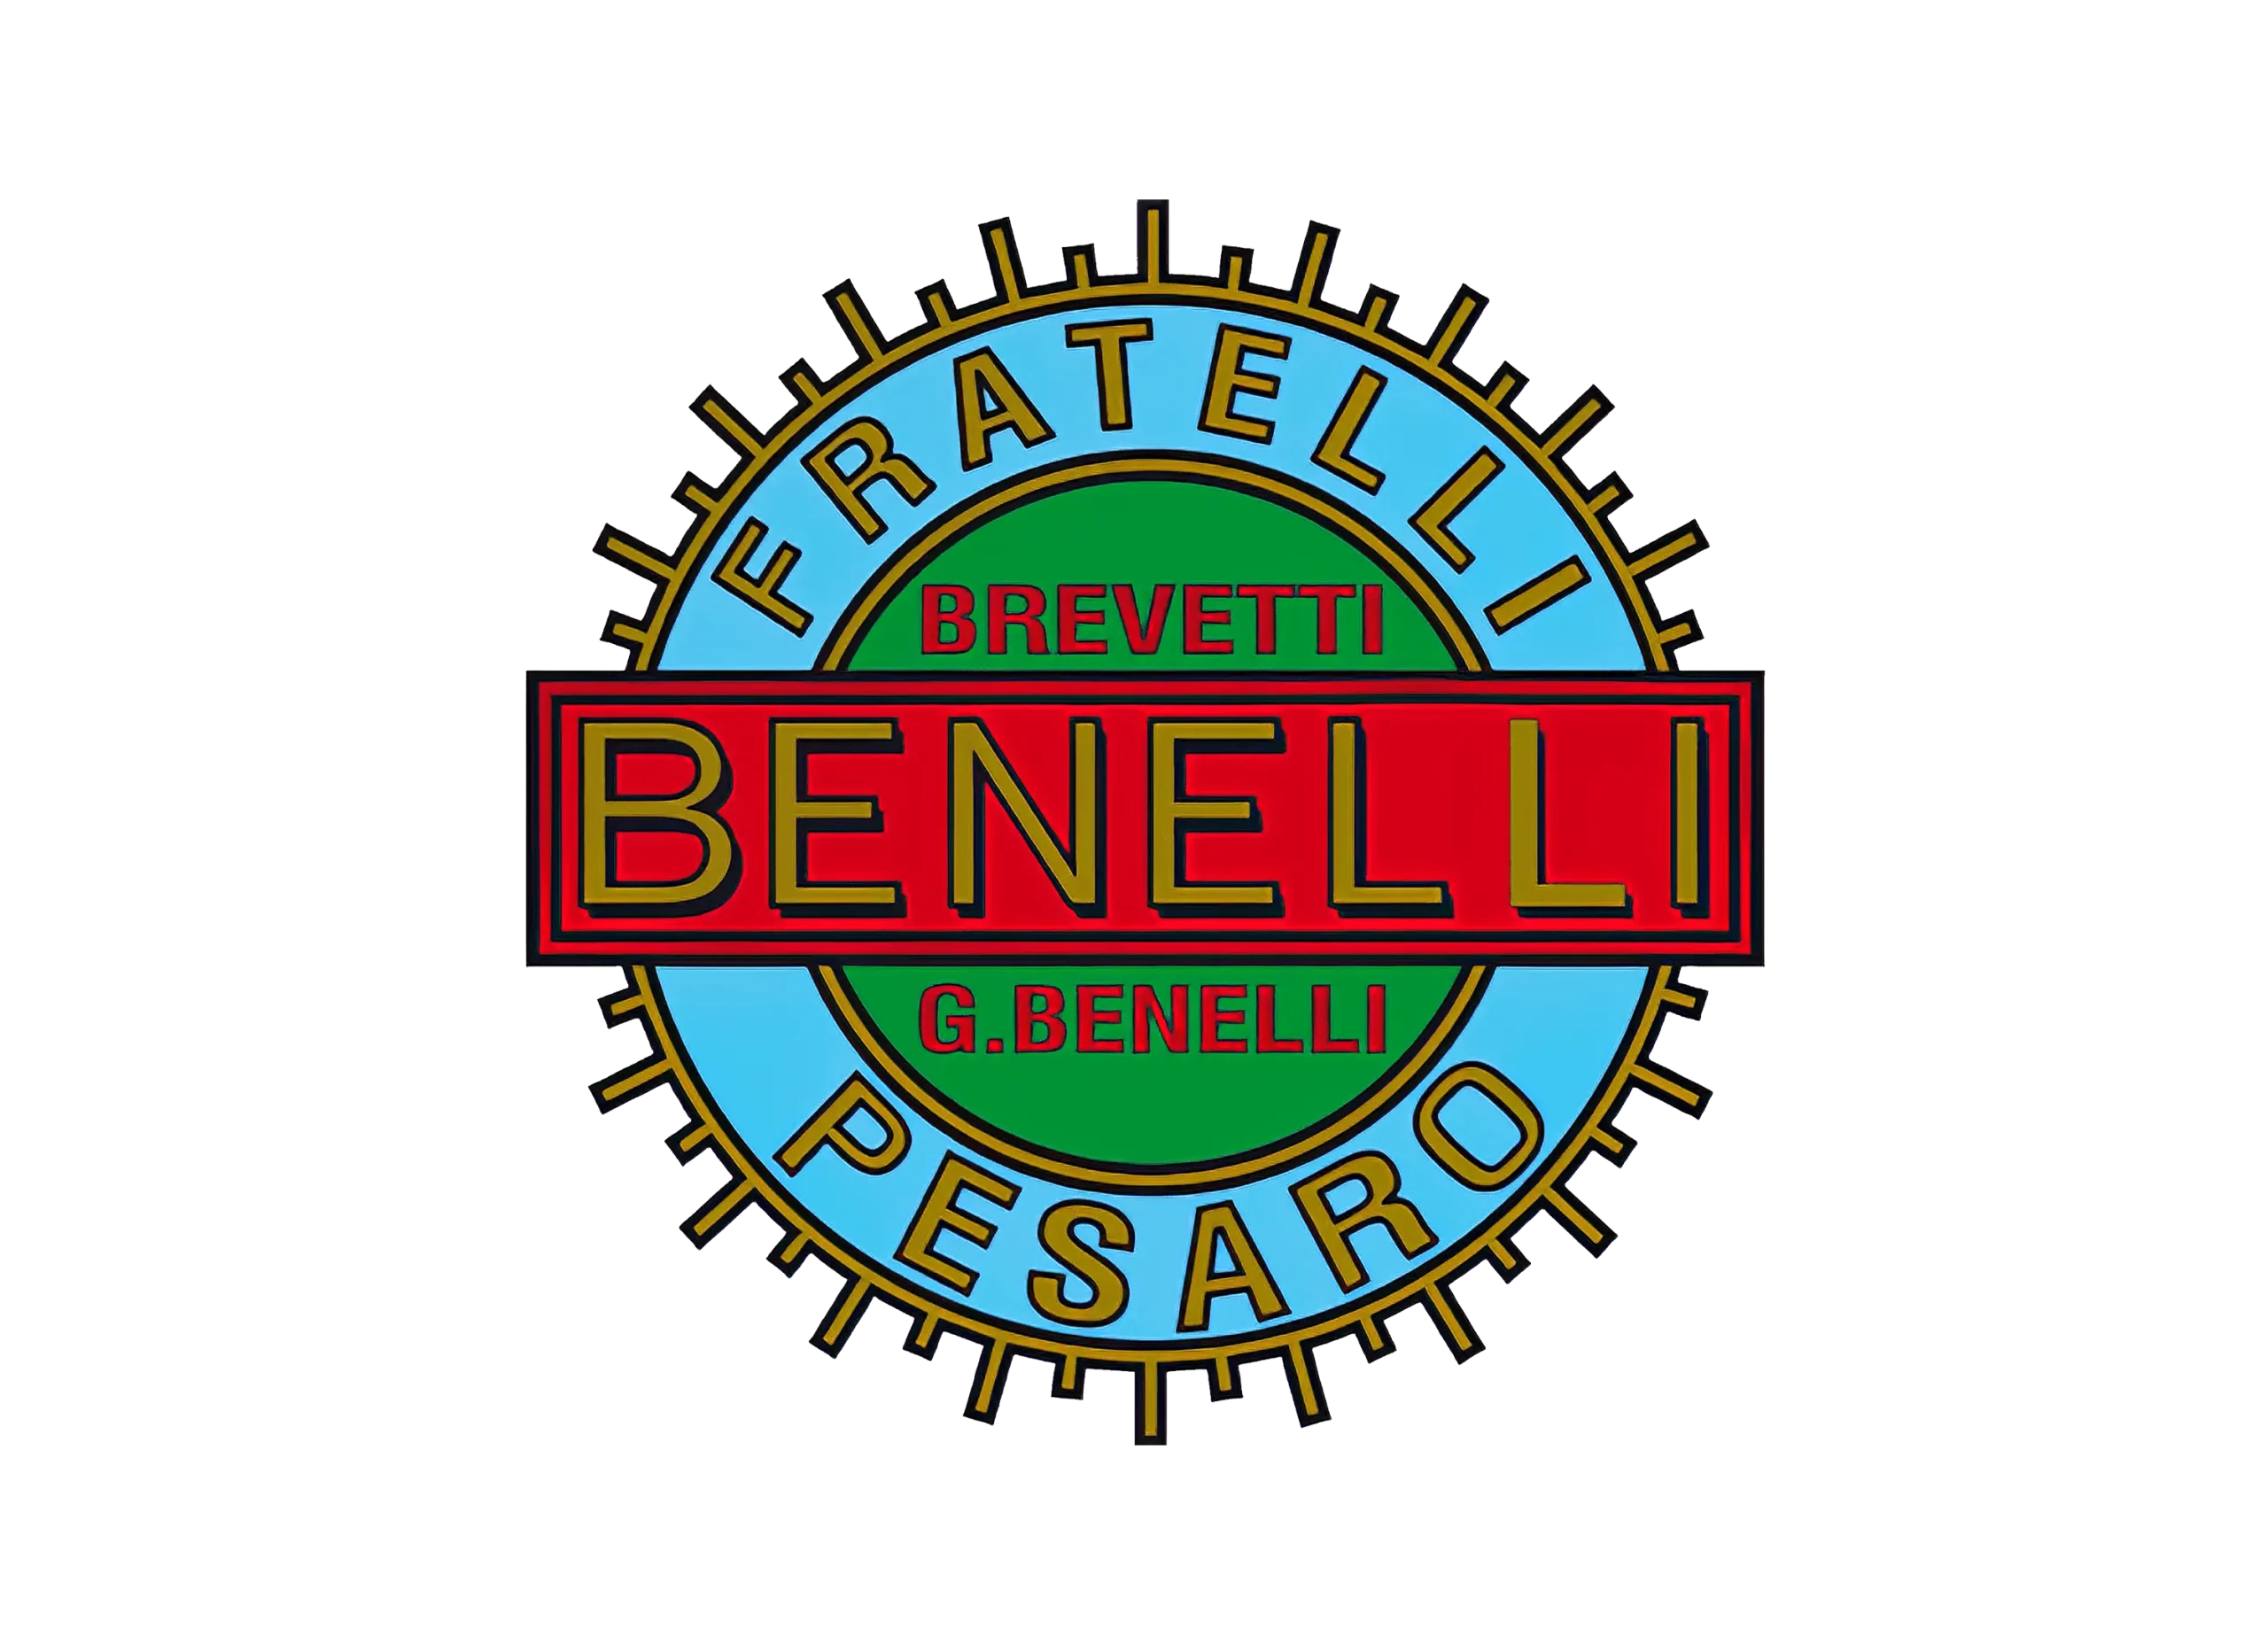 Benelli logo 1911-1925